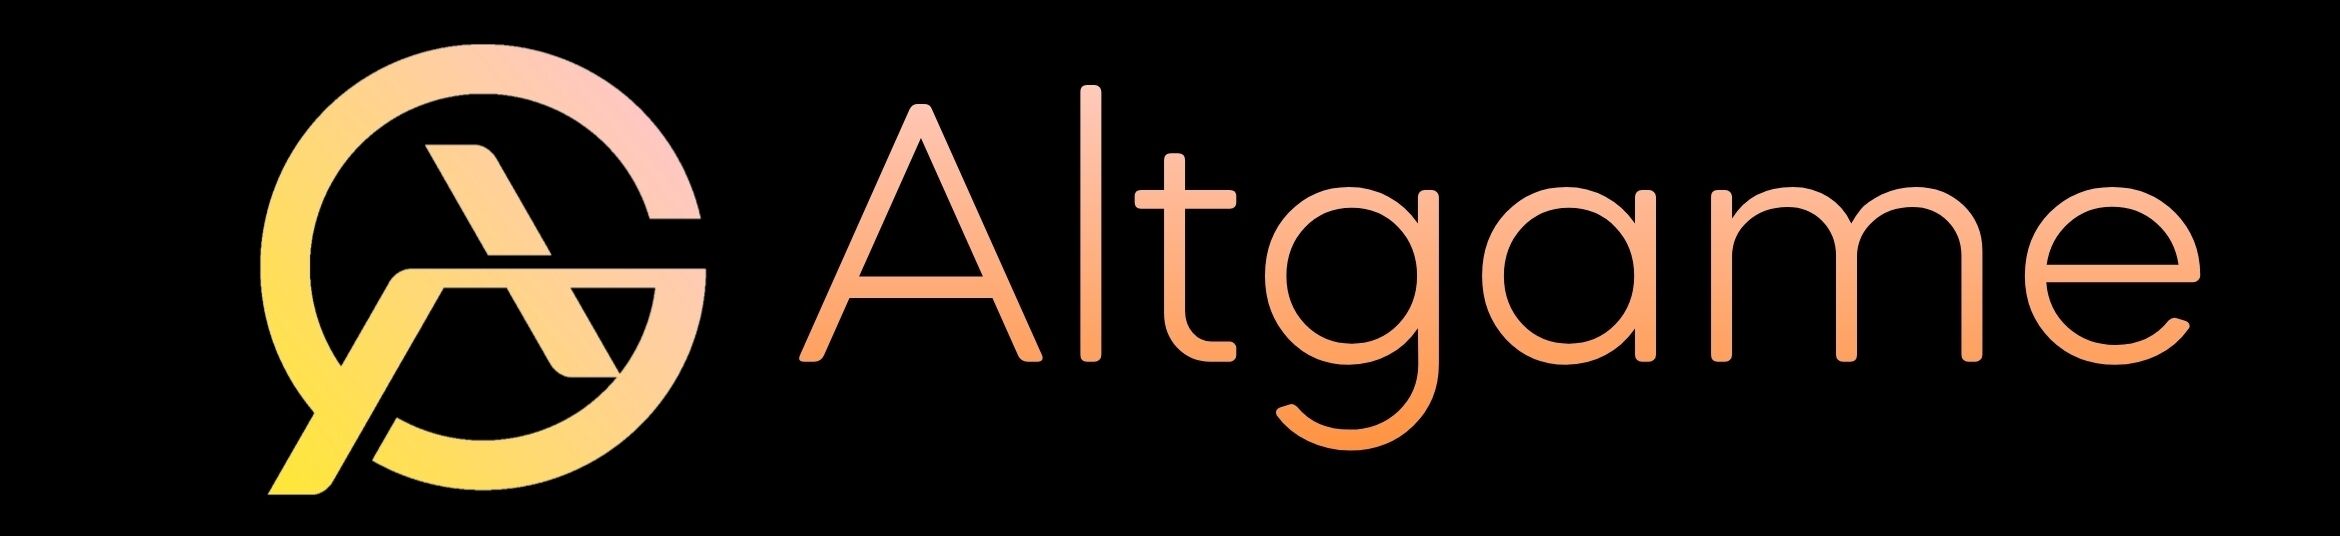 Altgamе ➤ Кыргызстан ᐉ lalafo.kg-да компаниянын Бизнес-профили